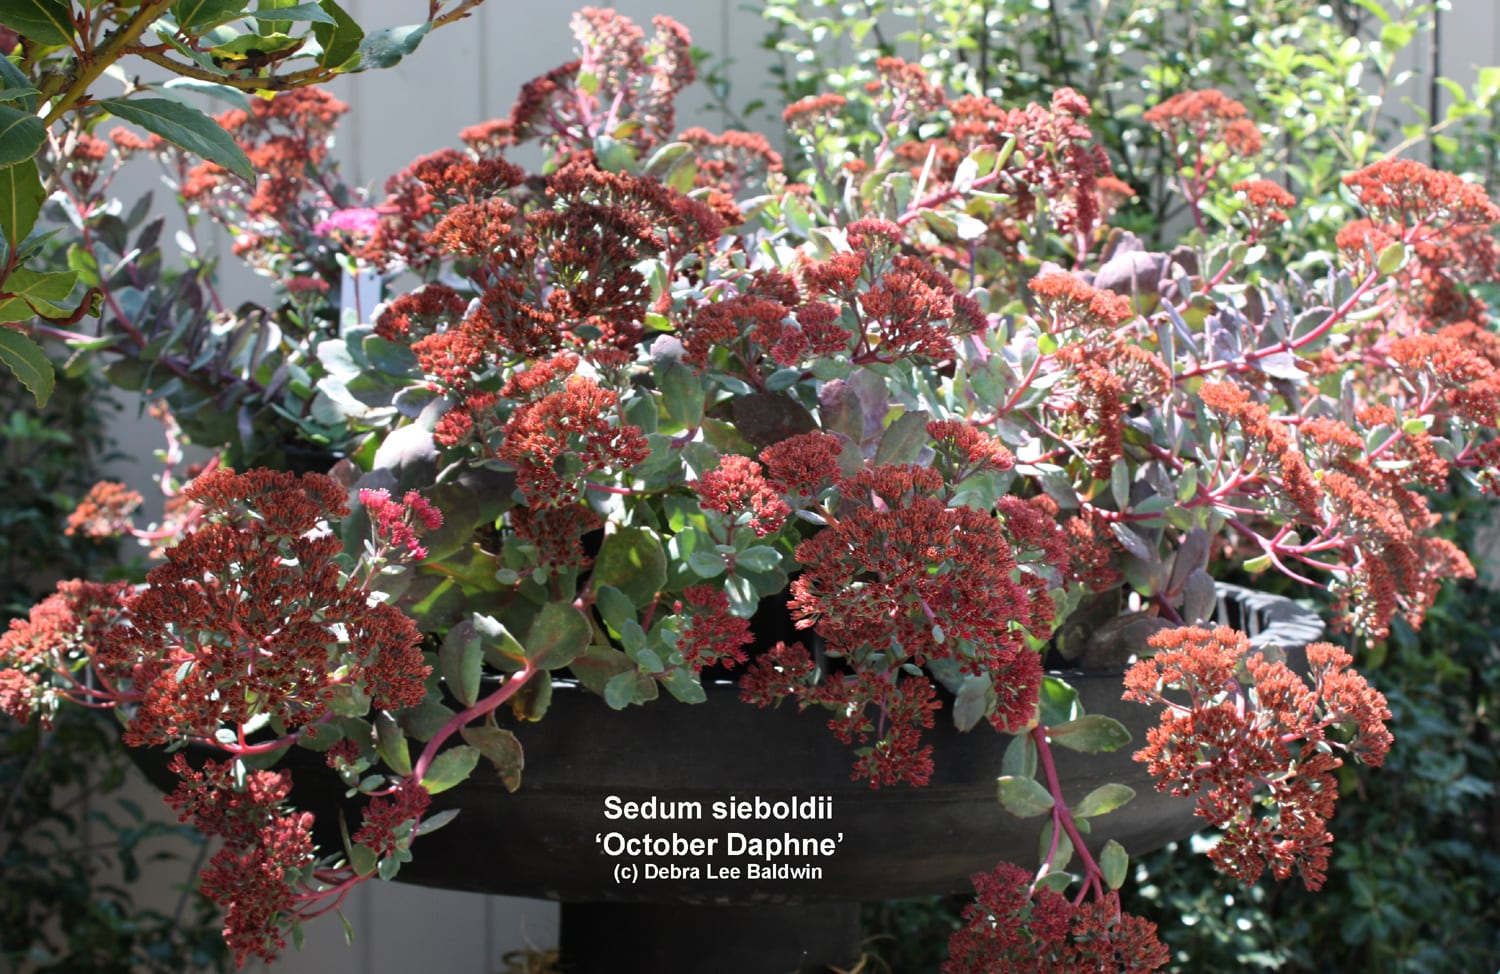 Shrub succulent Sedum sieboldii 'October Daphne' (c) Debra Lee Baldwin